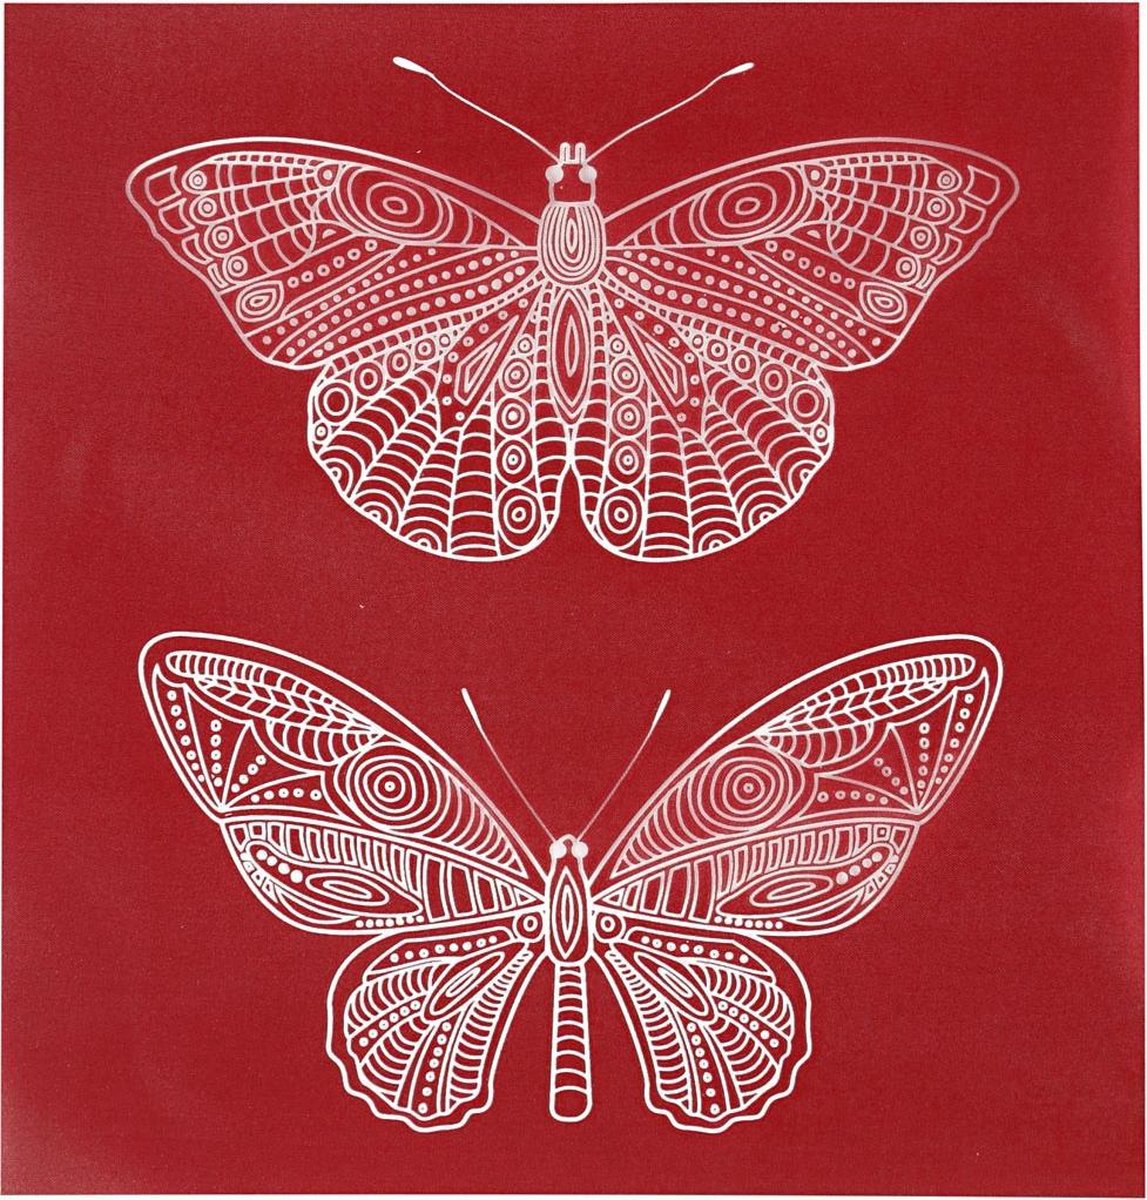 Creotime screen stencil vlinders 20 x 22 cm - Wit